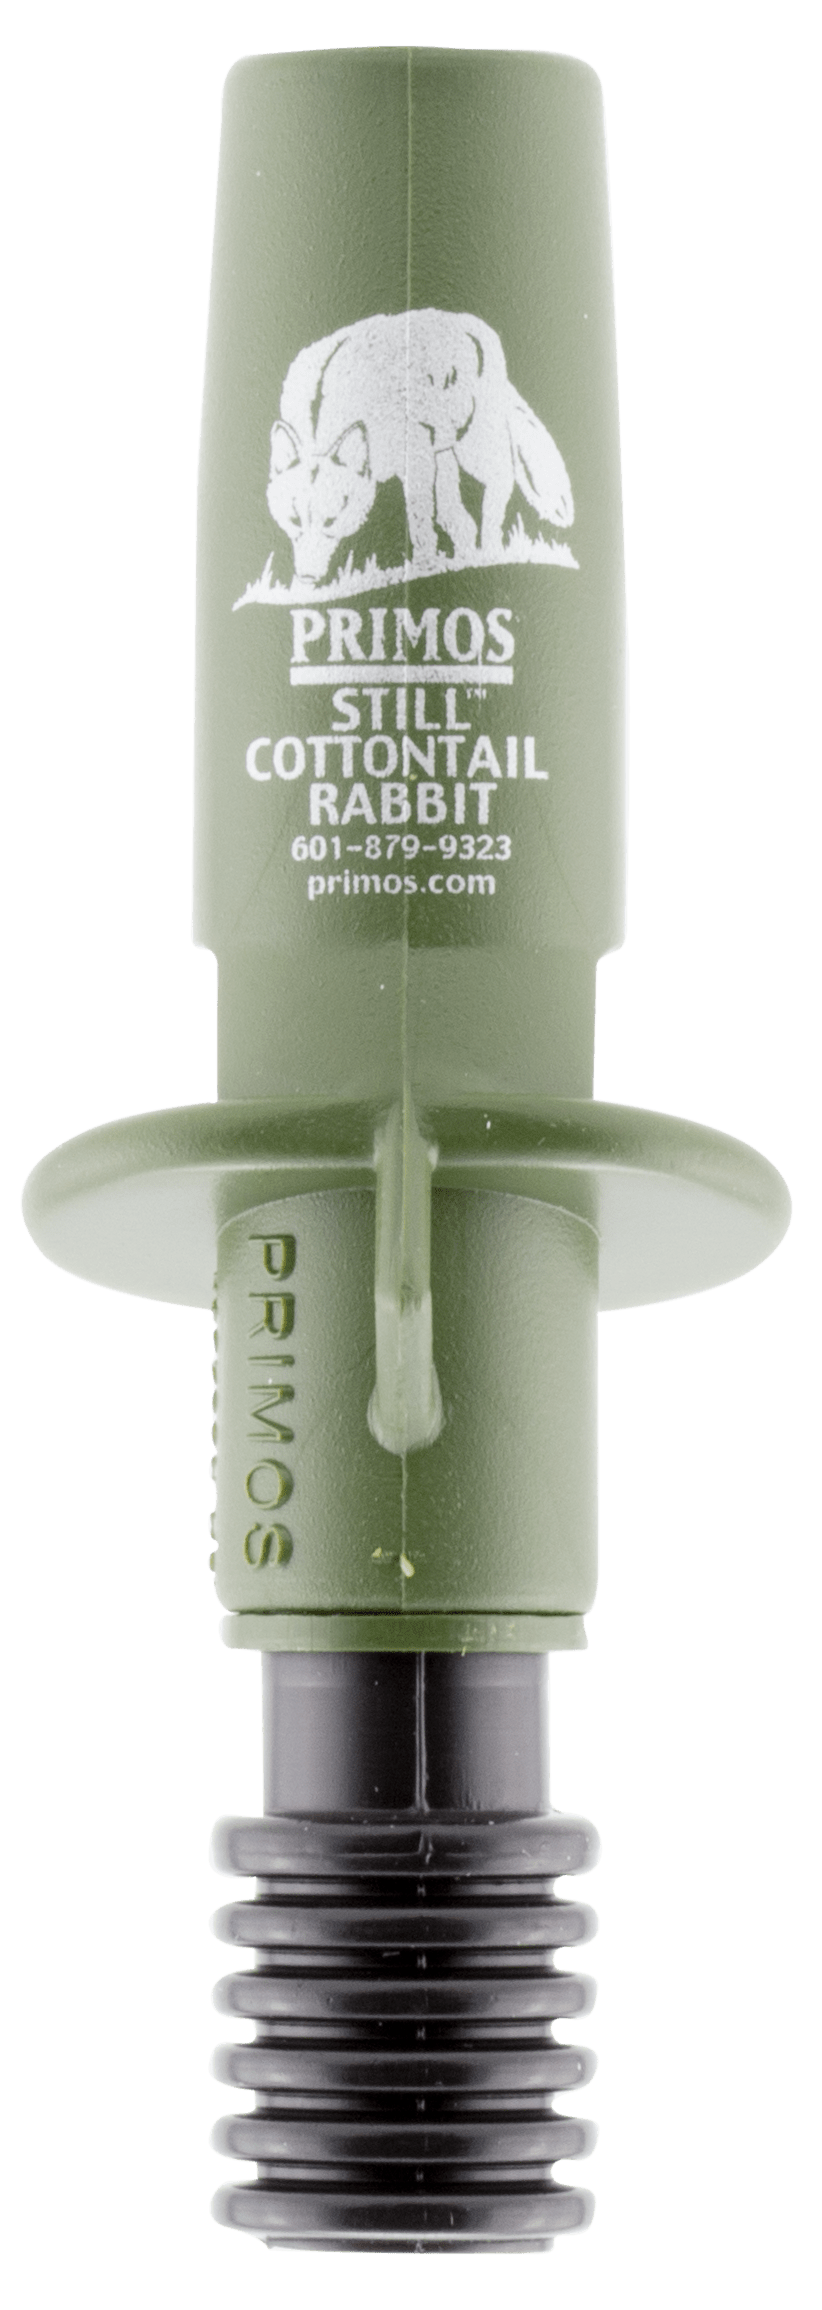 Primos Primos Still Cottontail Rabbit Predator Call Game Calls